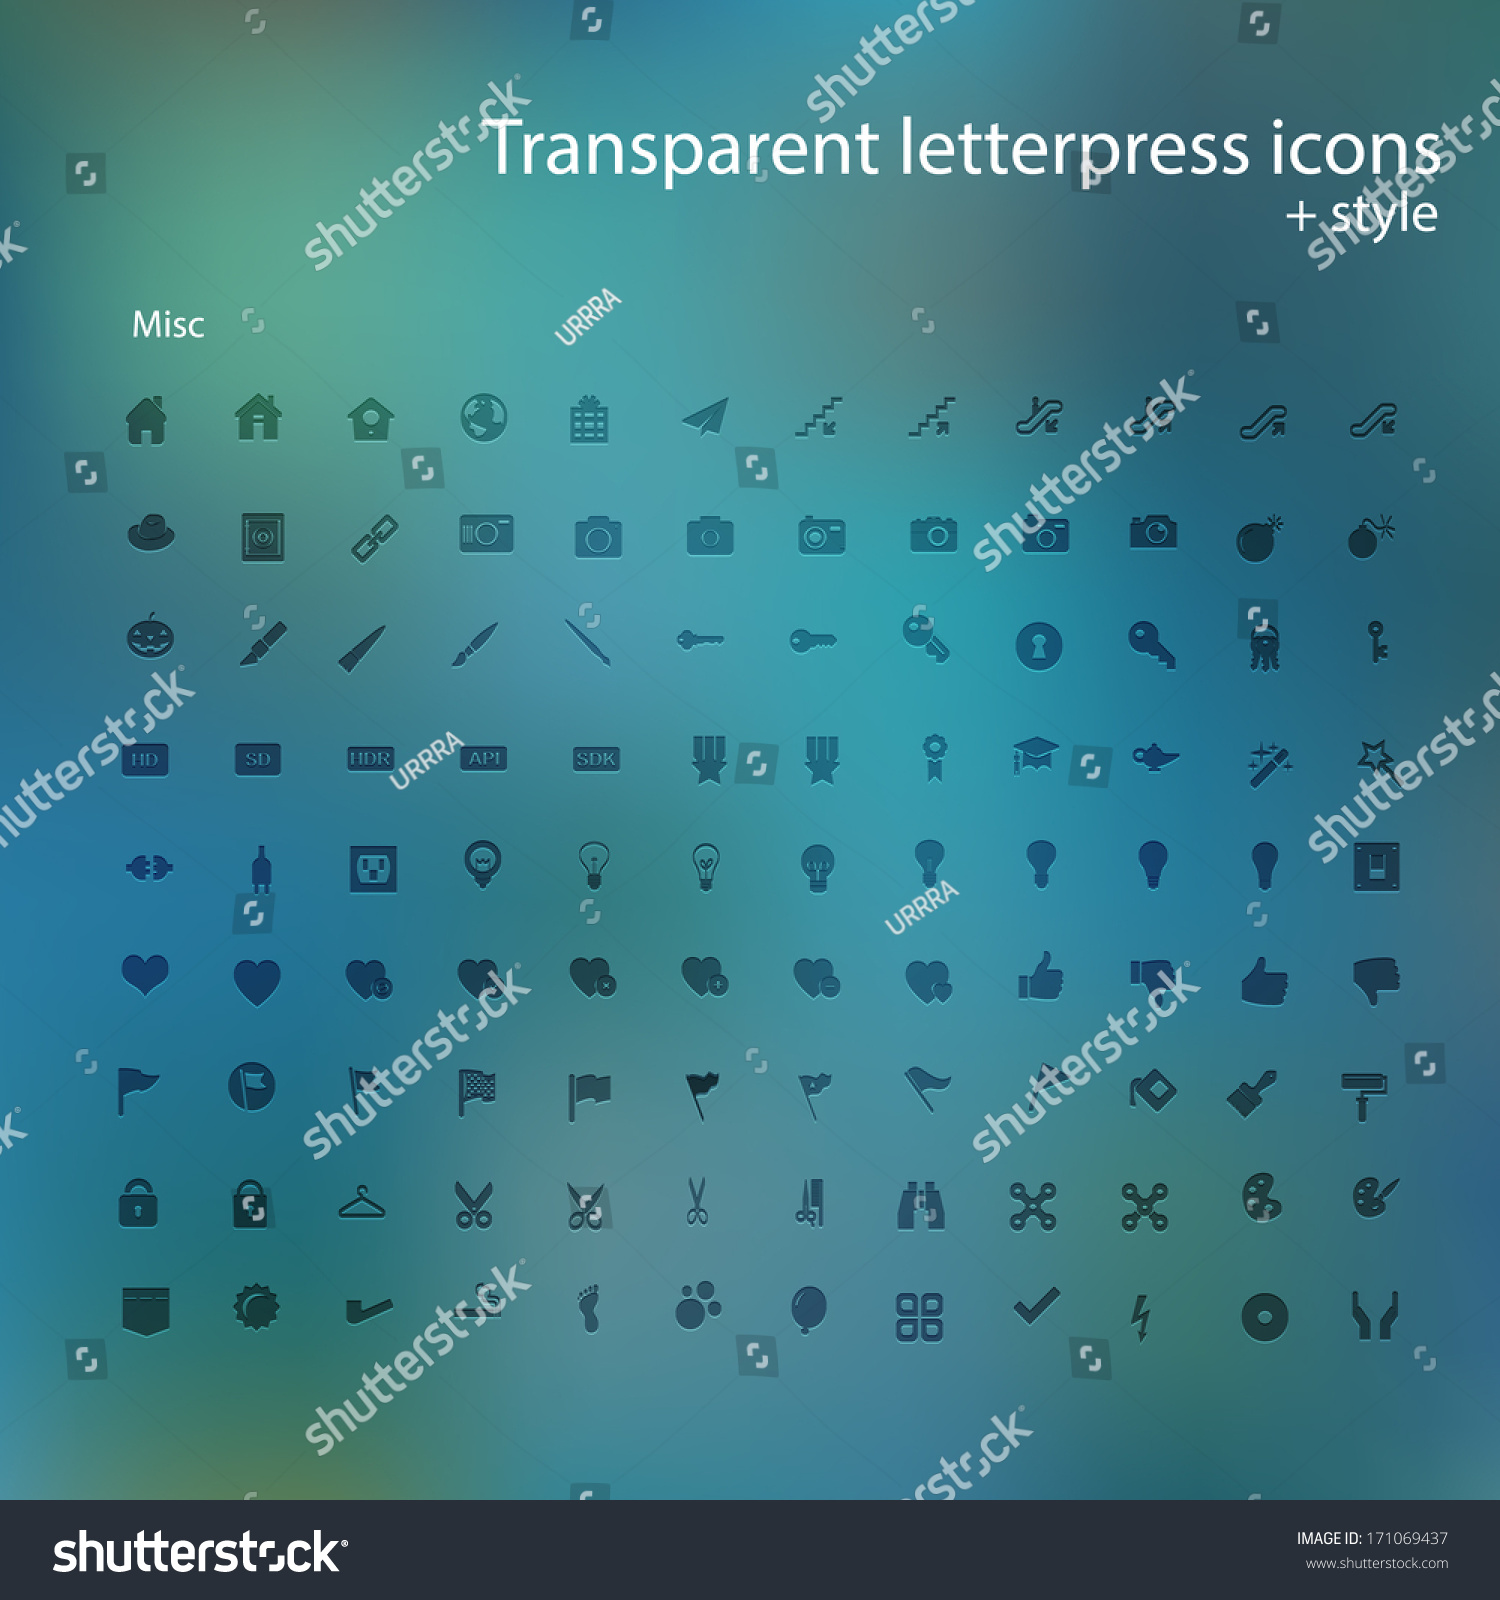 Edit Vectors Free Online - Transparent letterpress | Shutterstock Editor